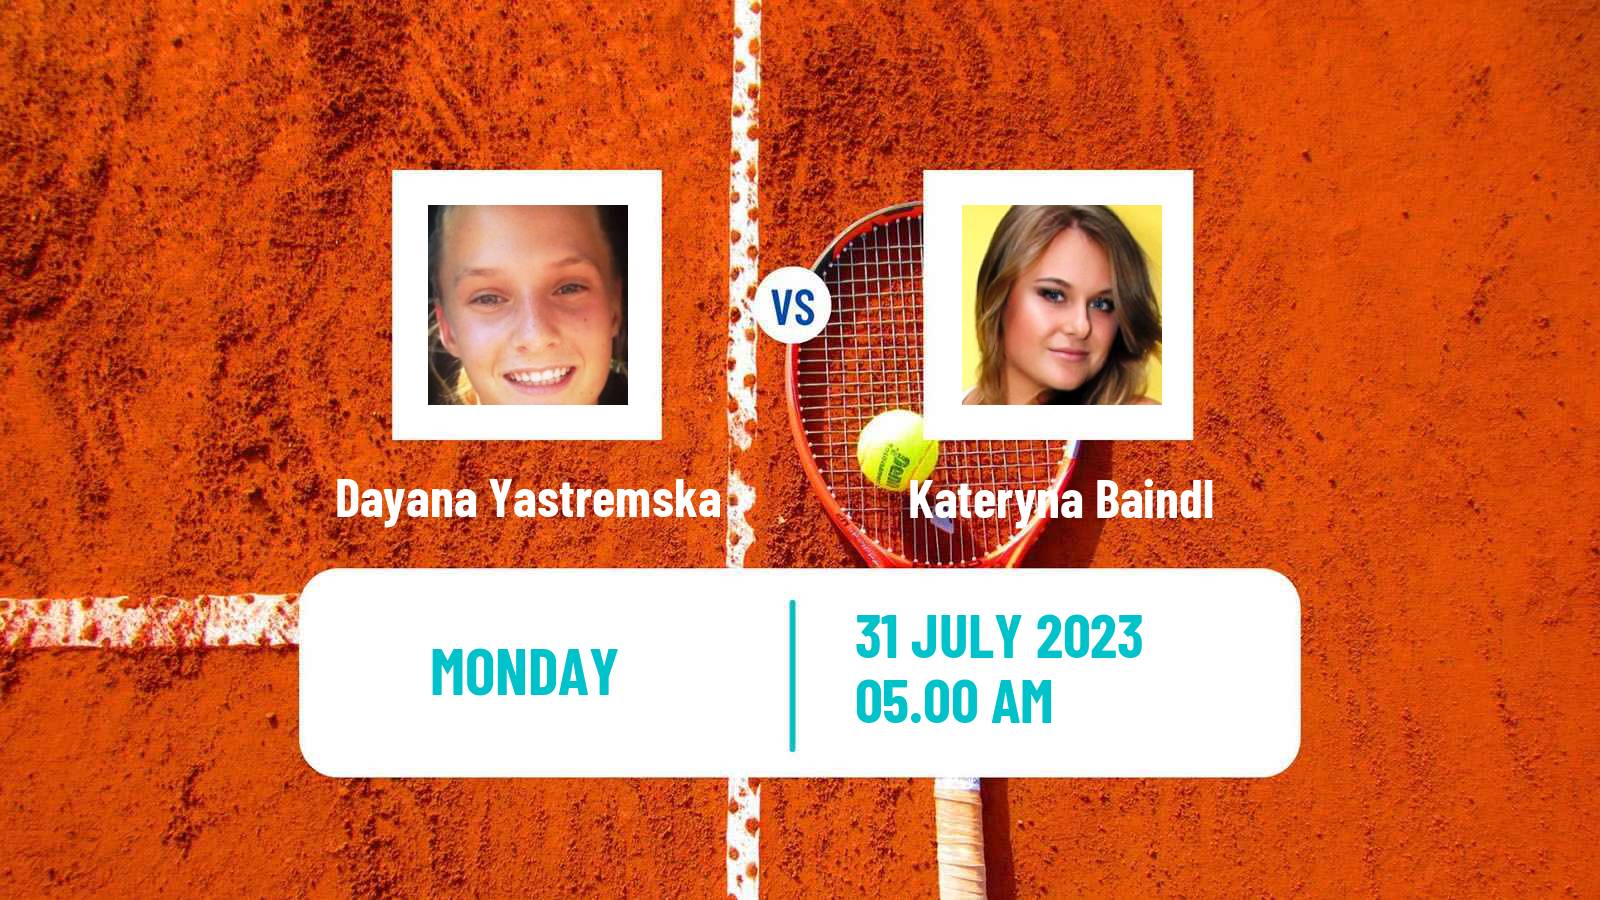 Tennis WTA Prague Dayana Yastremska - Kateryna Baindl